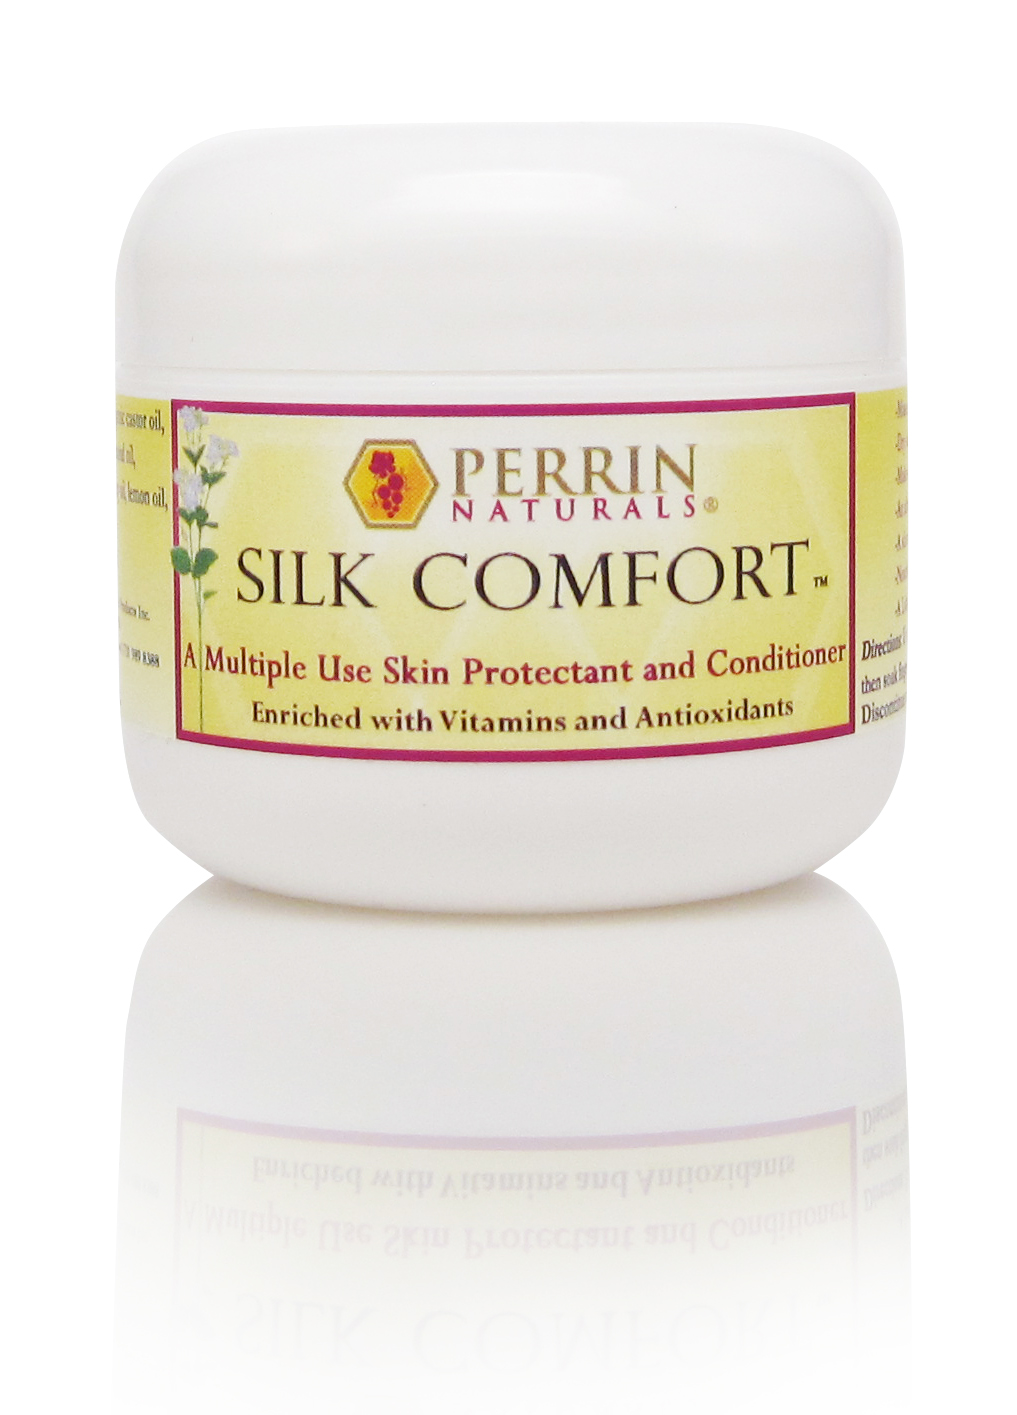 Silk Comfort by Perrin Naturals